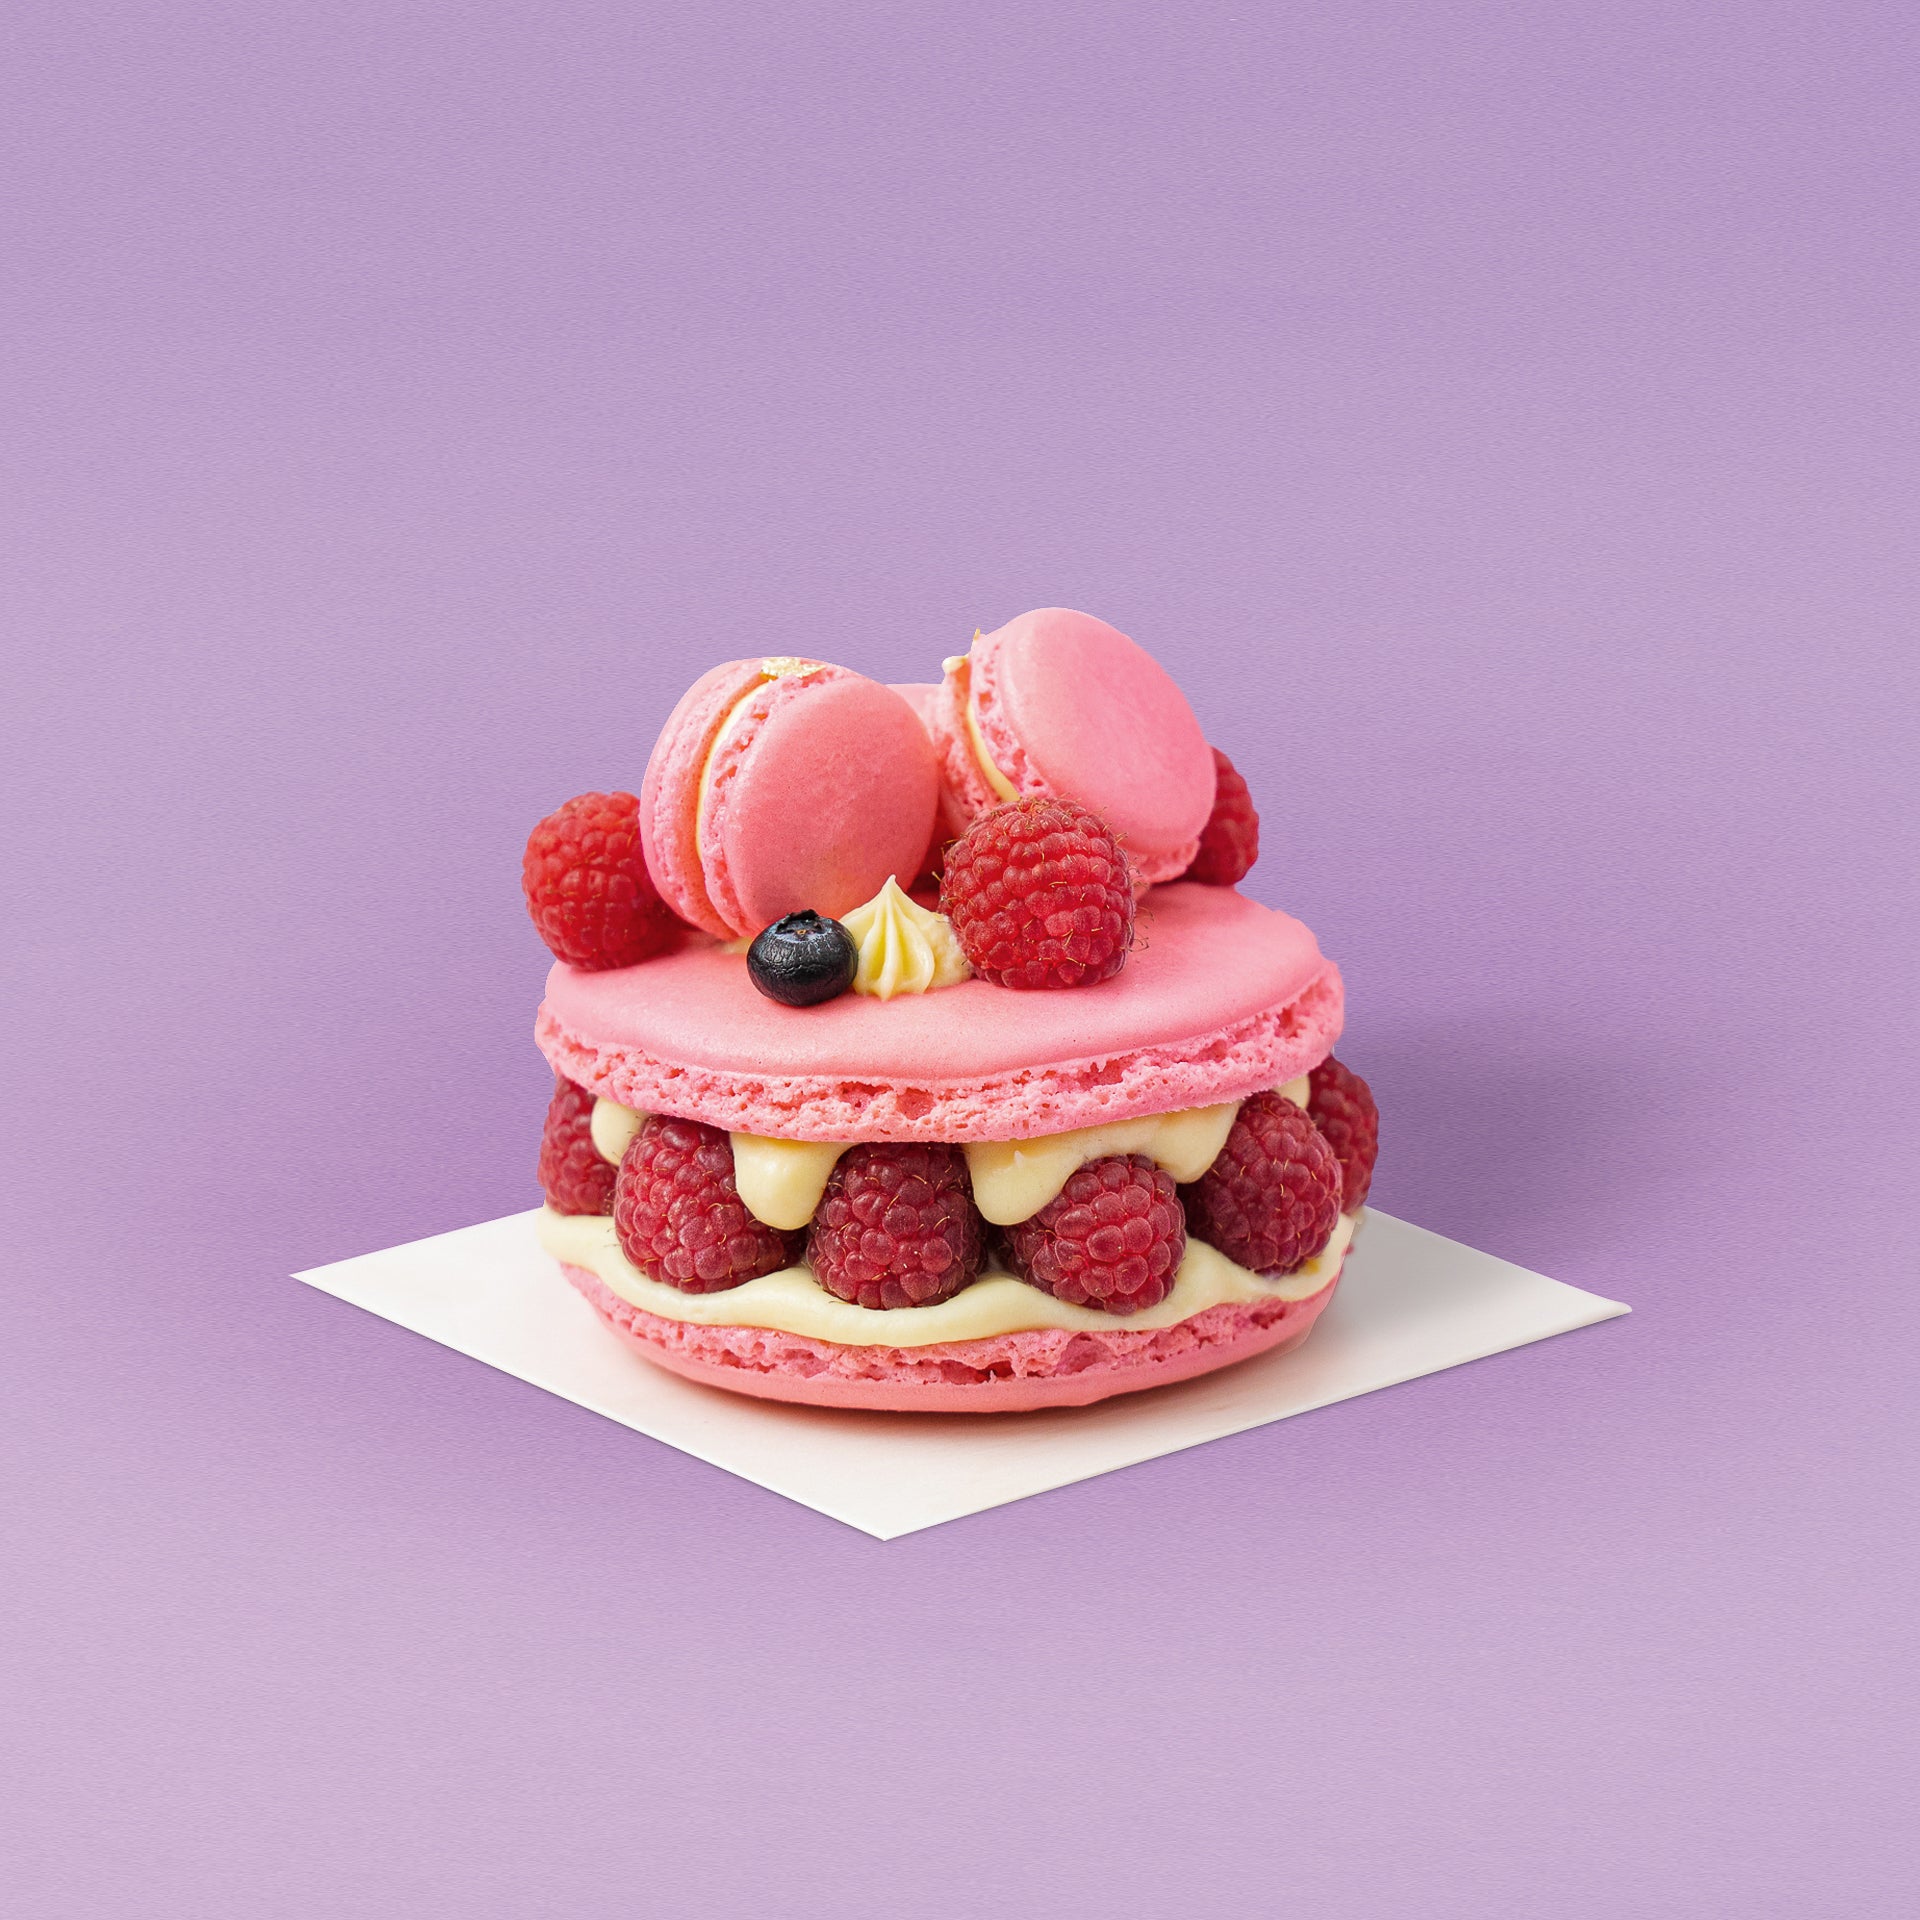 Ispahan macaron stock image. Image of pastry, bake, mint - 49238775